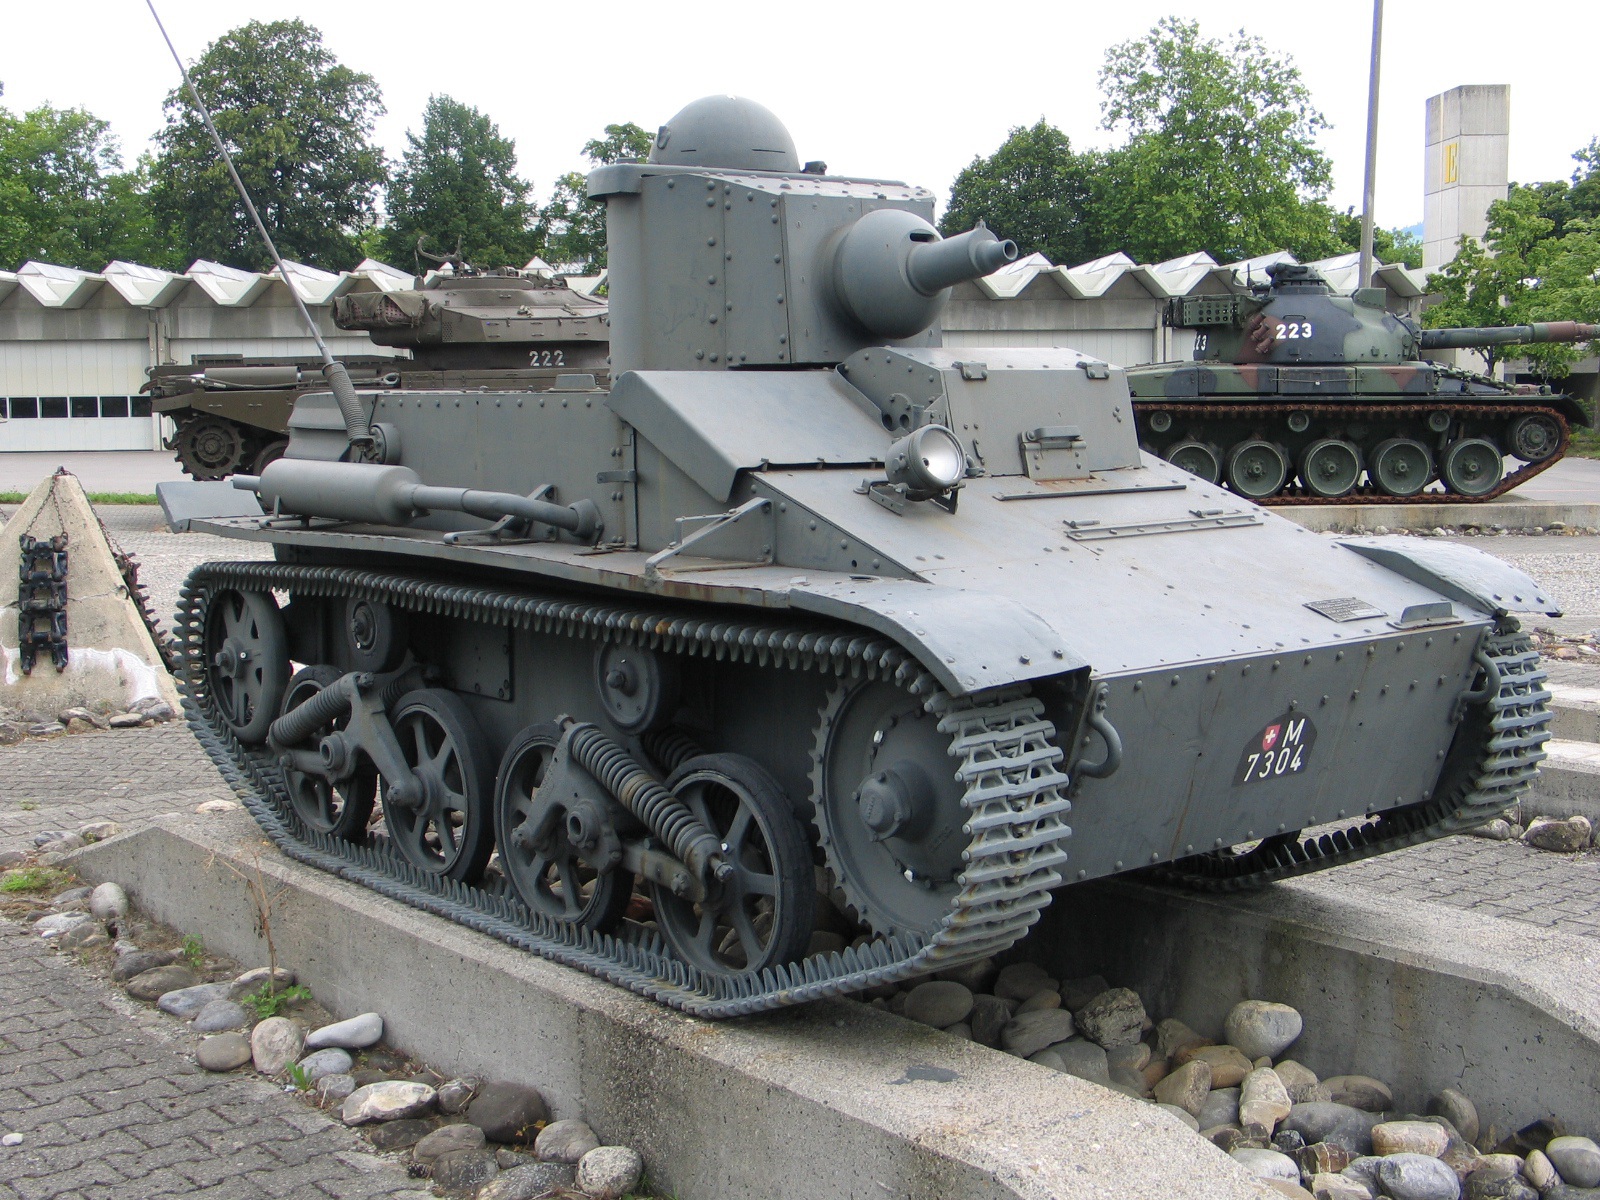 Vickers Carden Loyd Light Tank